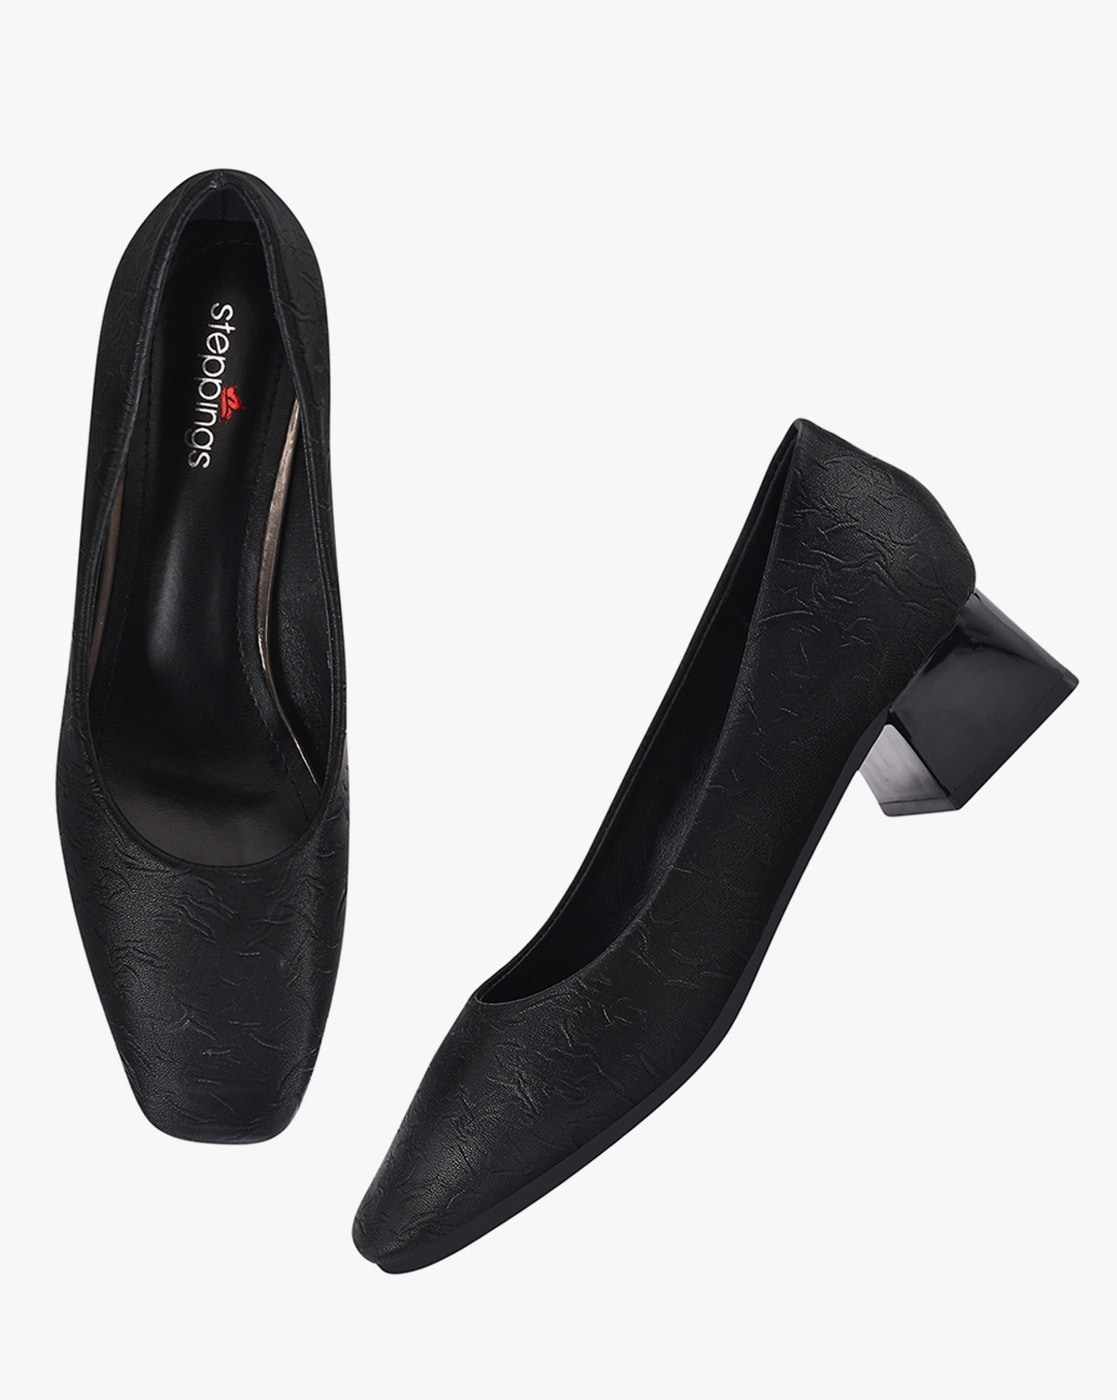 Buy Pumps Block Heels Thick Heel Low Heel Black Classic Work Shoes Leather  - Ricici.com